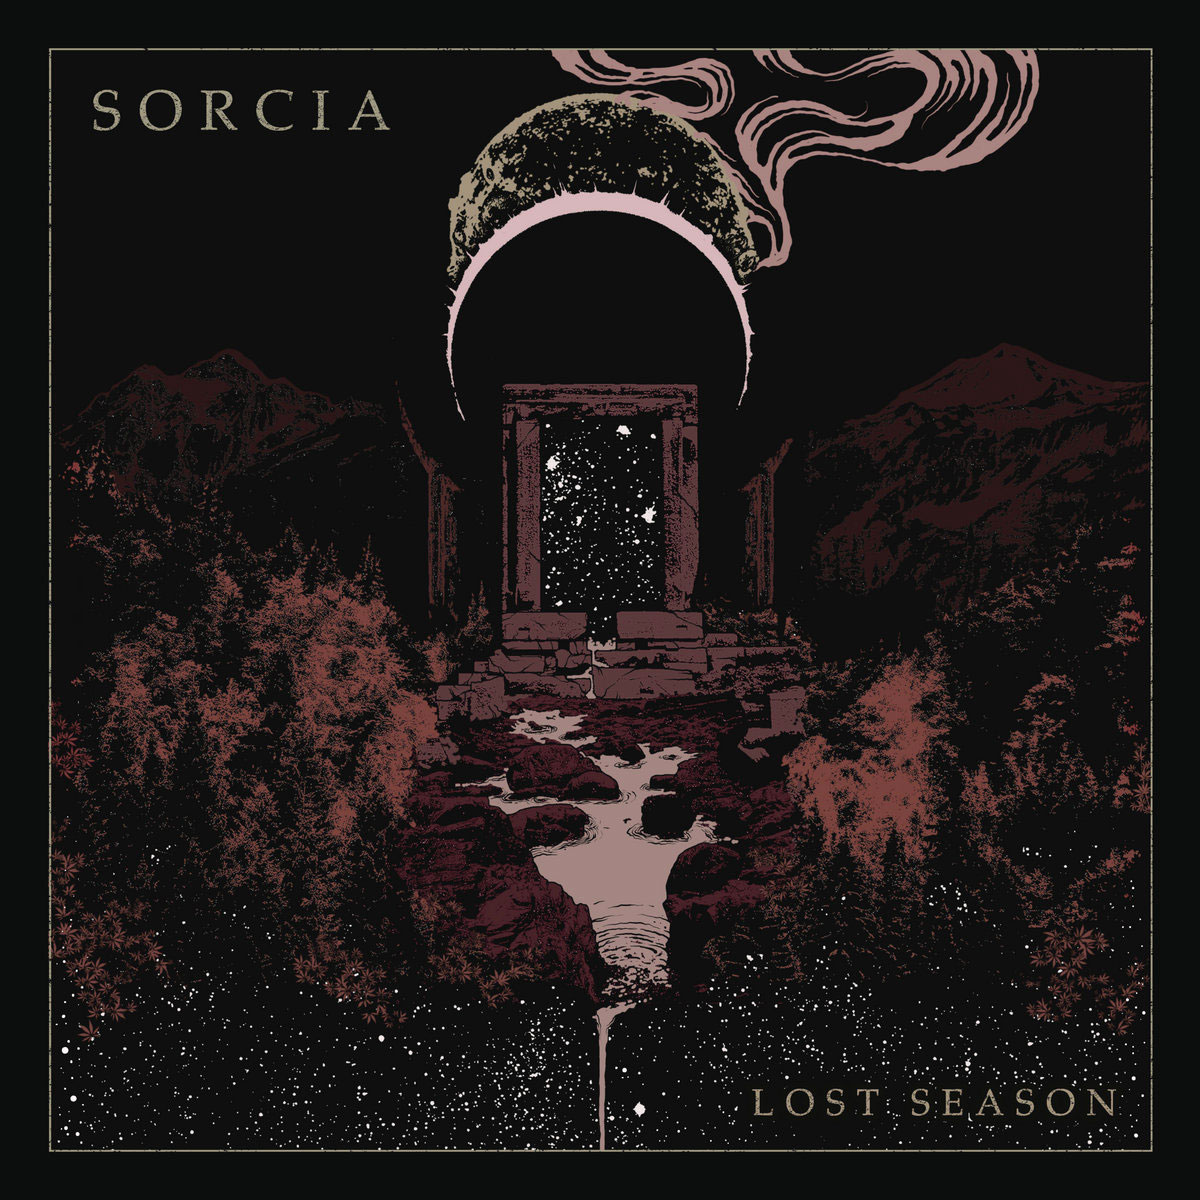 Lost Season by Sorcia